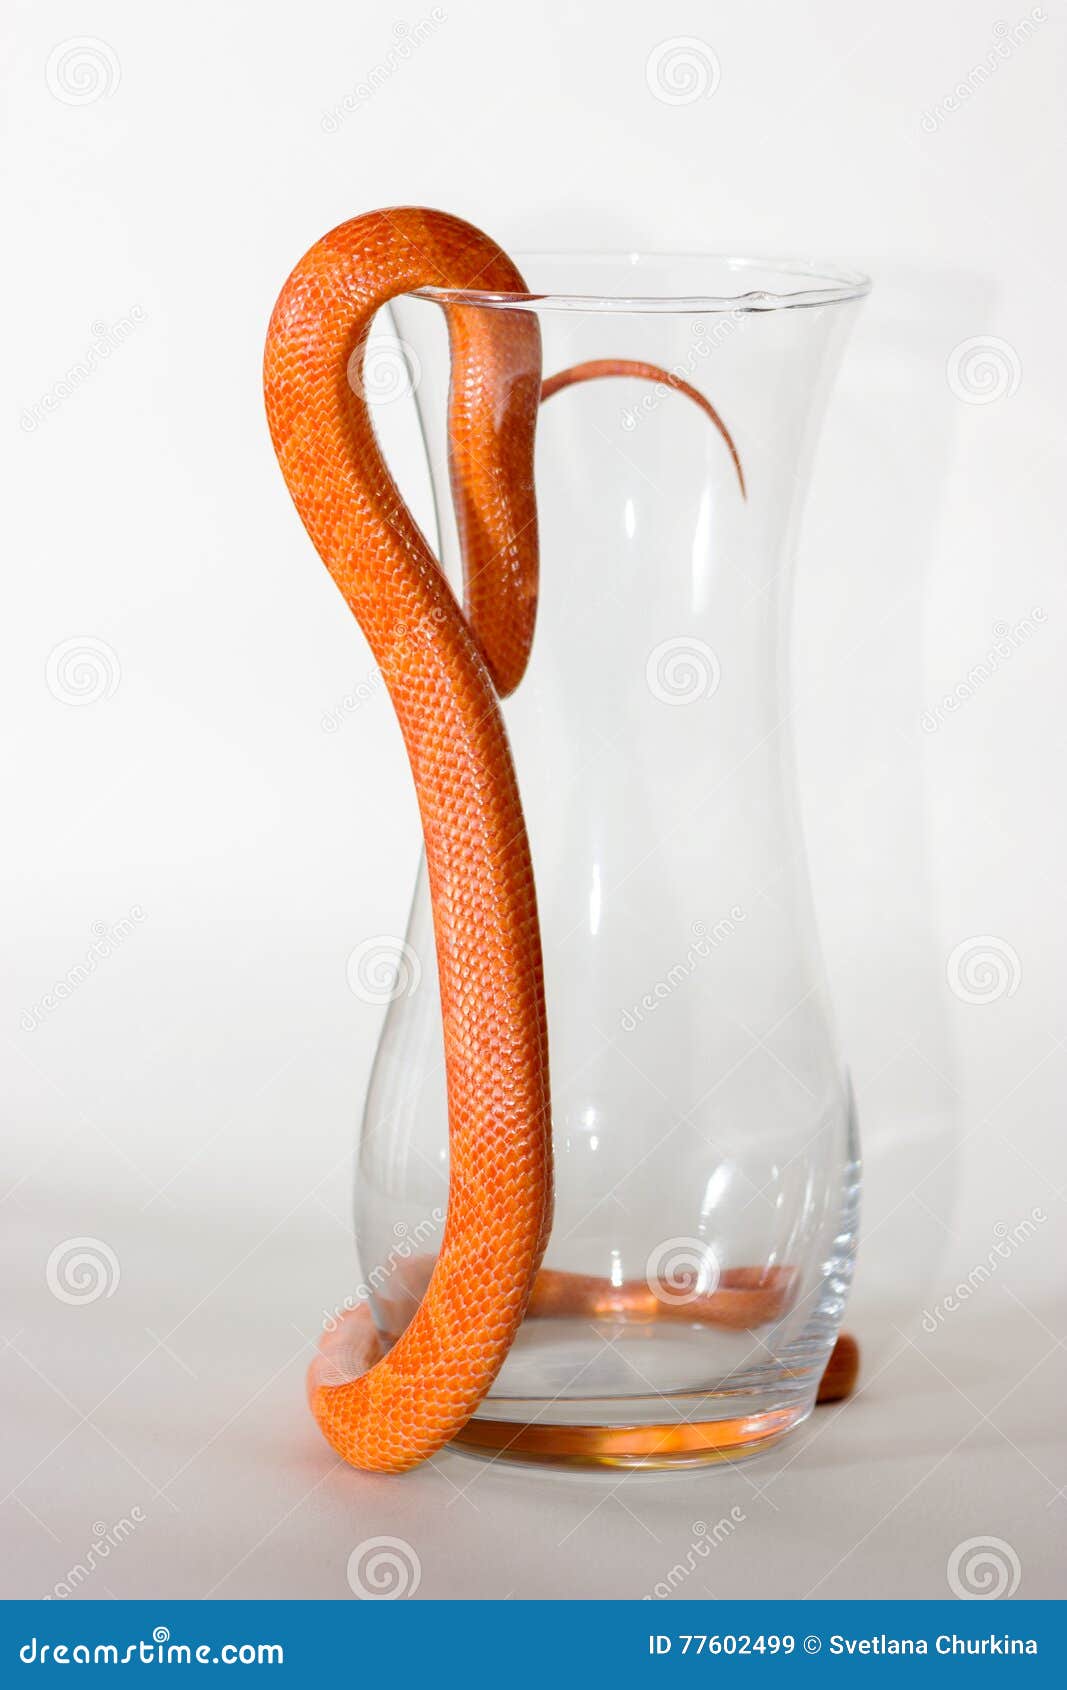 hypo fire corn snake